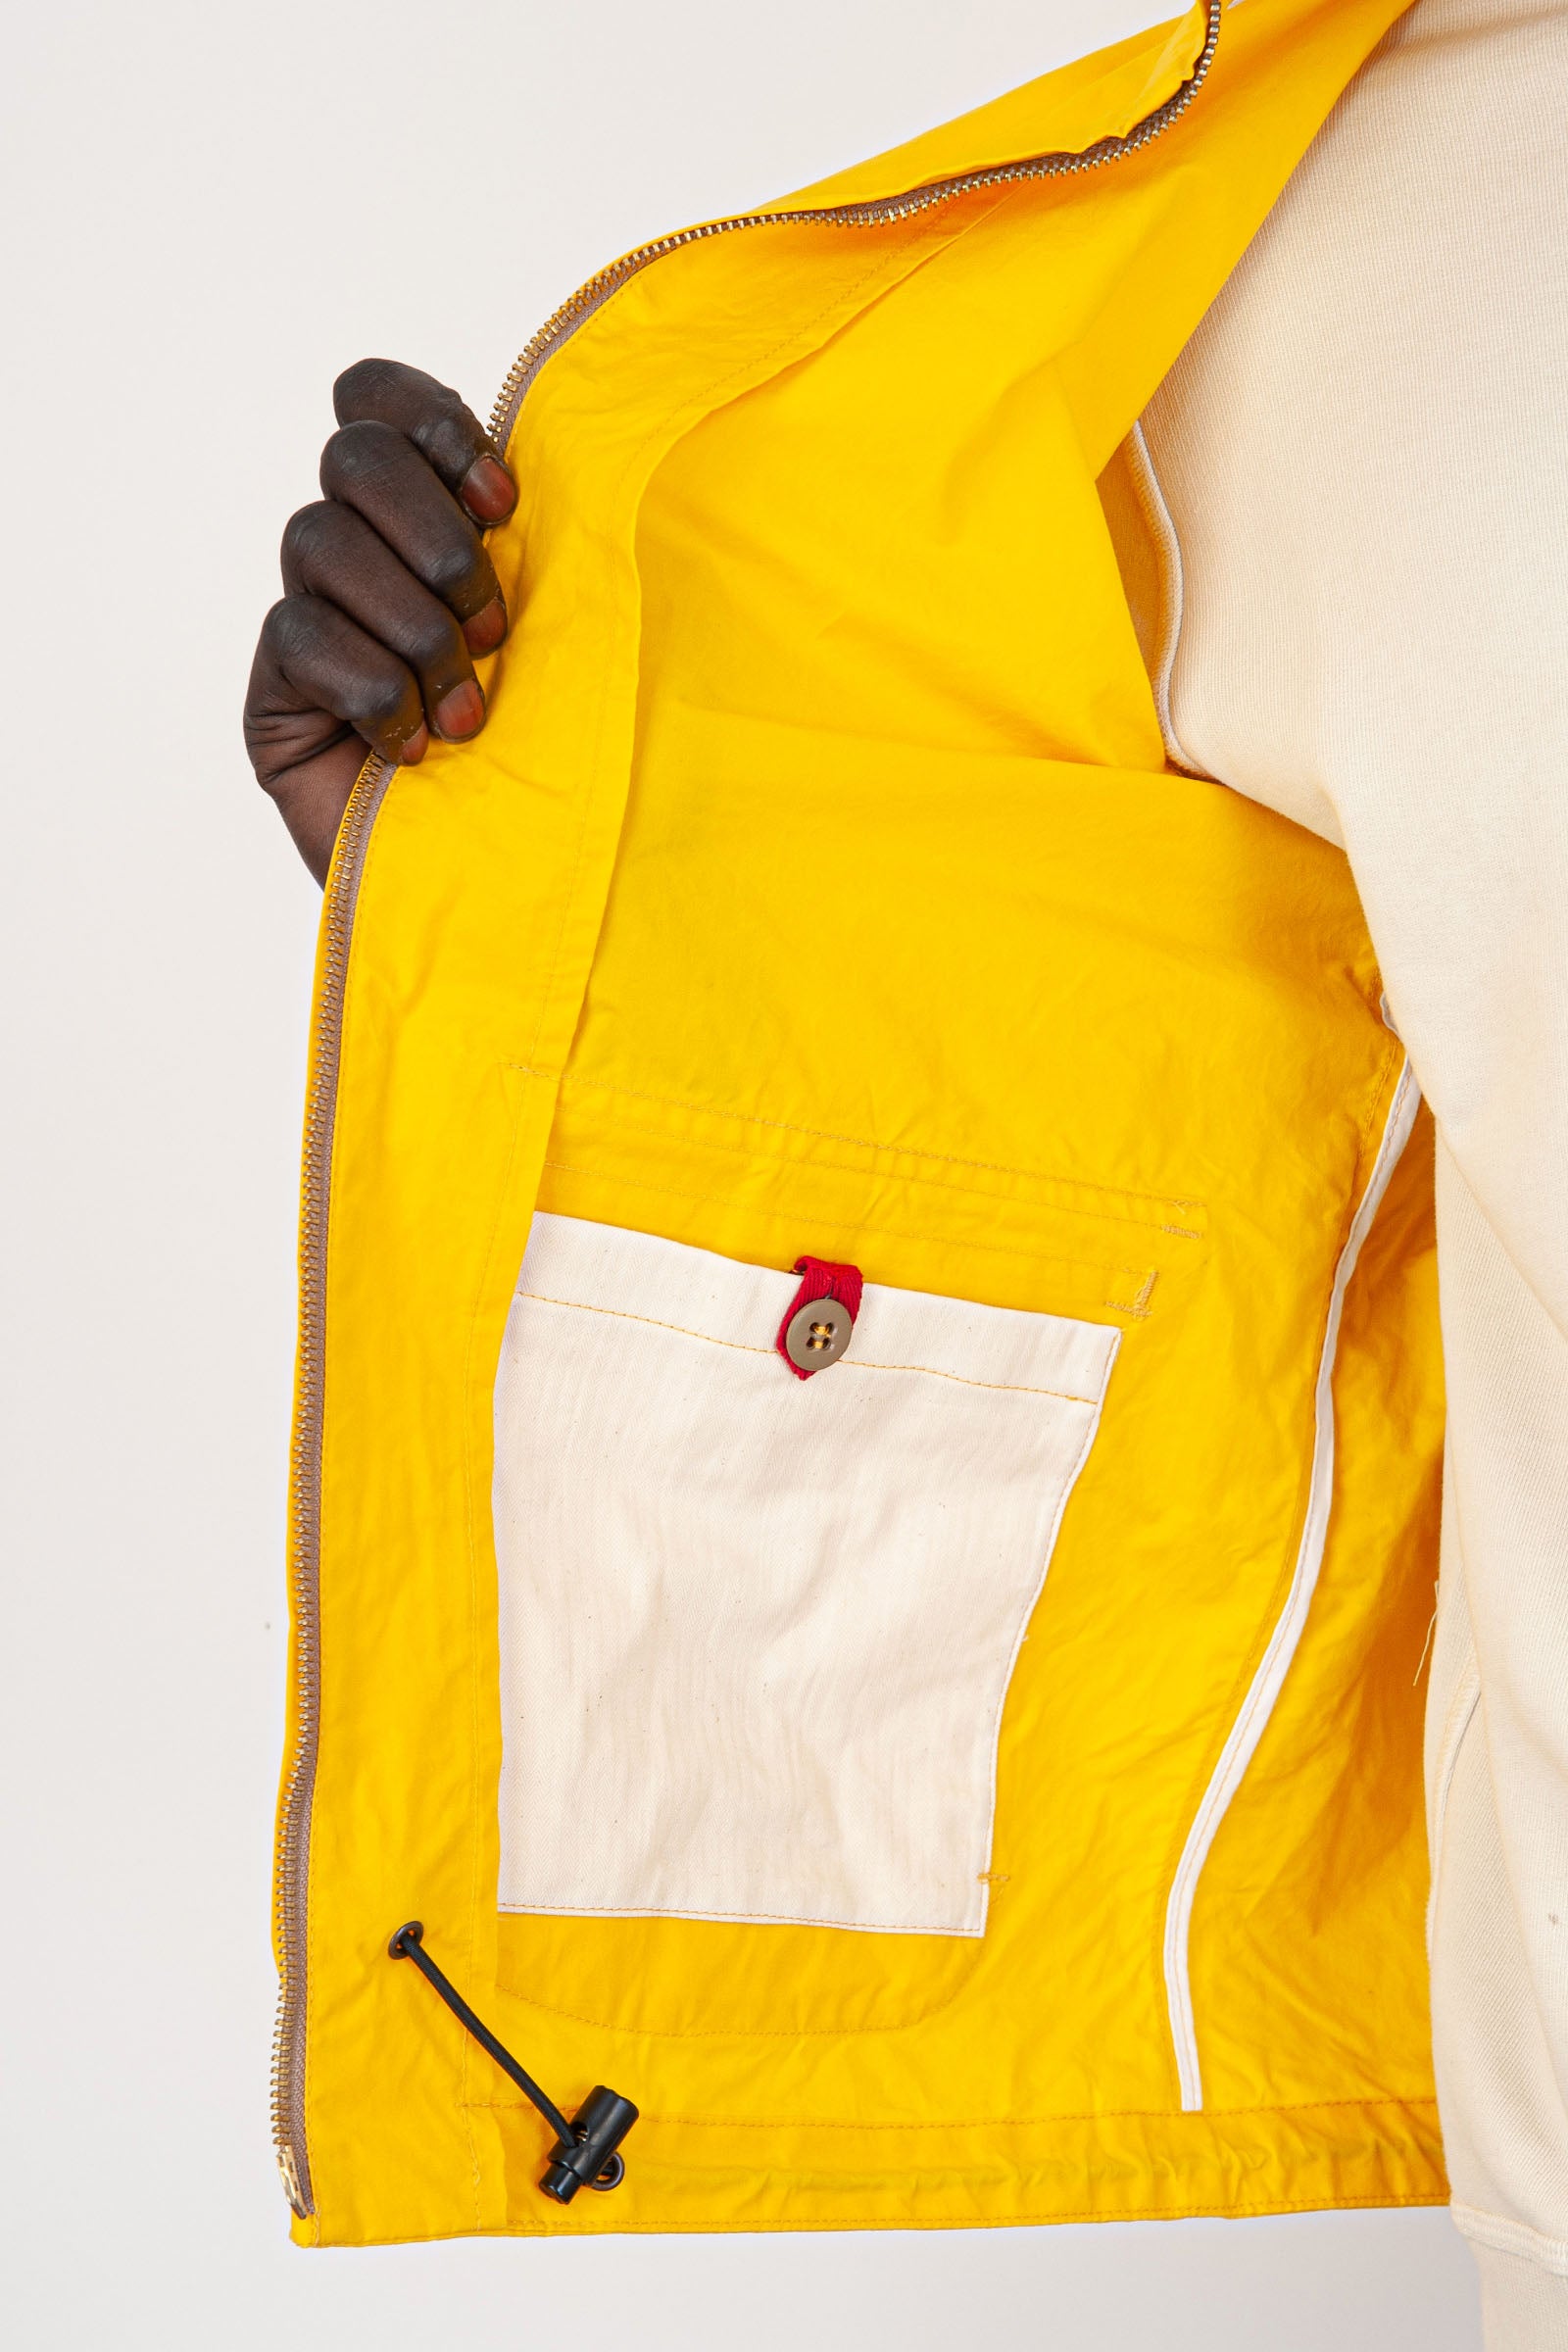 Manifattura Ceccarelli Blazer Coat With Hood Yellow Cotton - 6